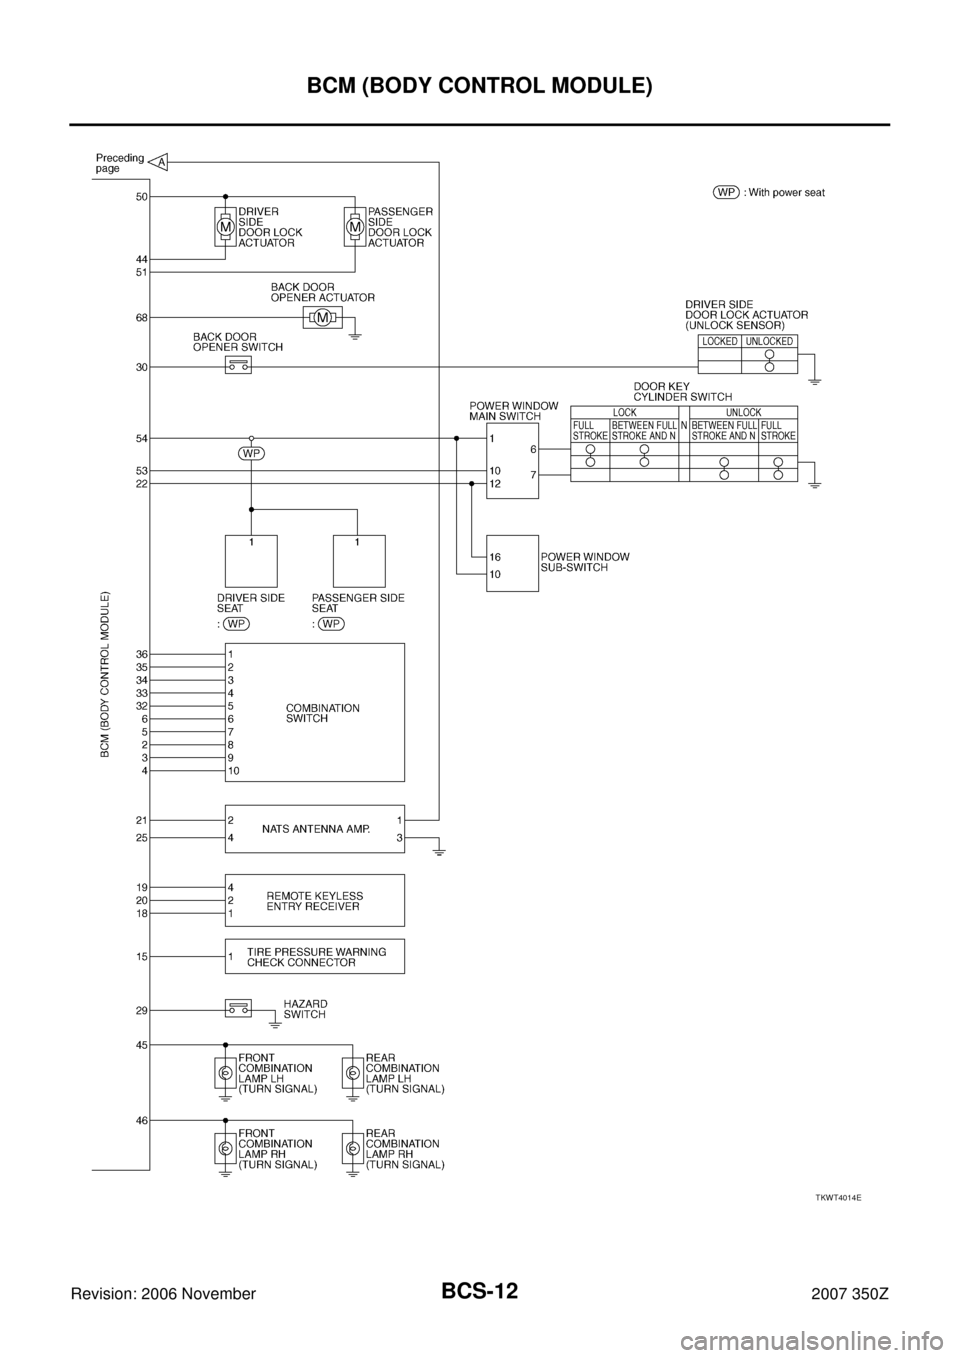 NISSAN 350Z 2007 Z33 Body Control System User Guide BCS-12
BCM (BODY CONTROL MODULE)
Revision: 2006 November2007 350Z
TKWT4014E 